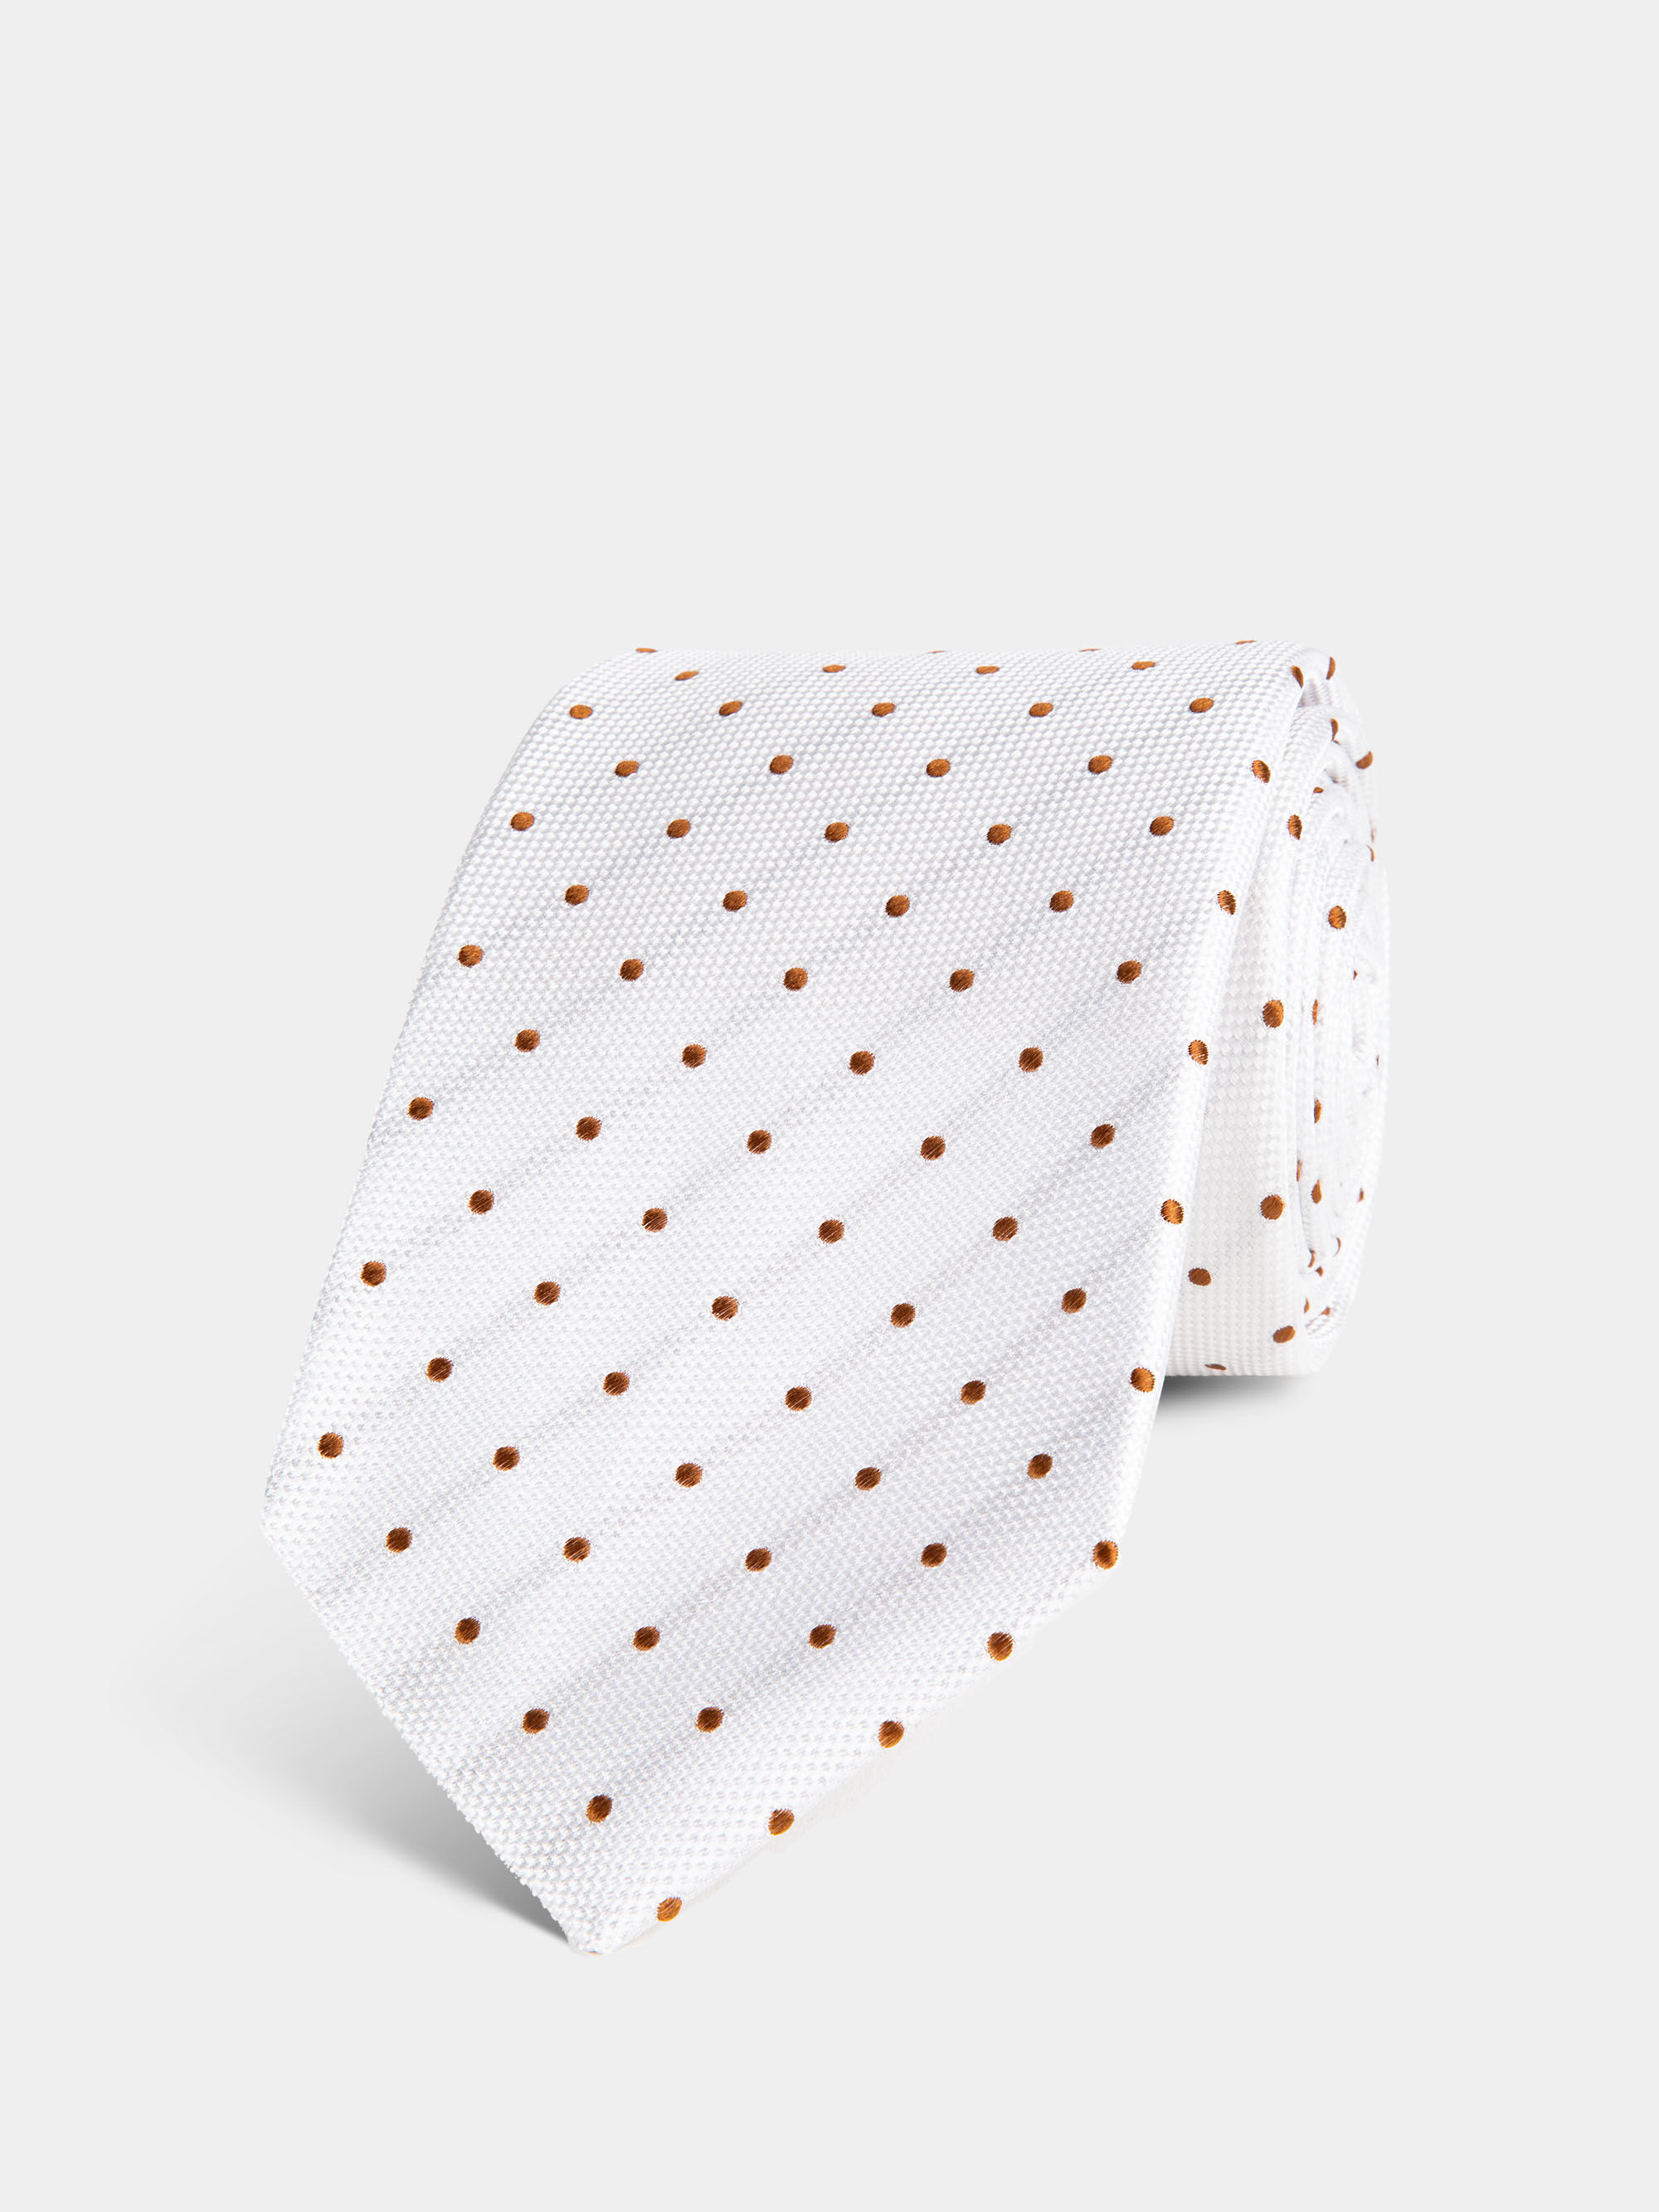 White With Black Polka Dots Necktie Silk Necktie With Spotted Patterns 